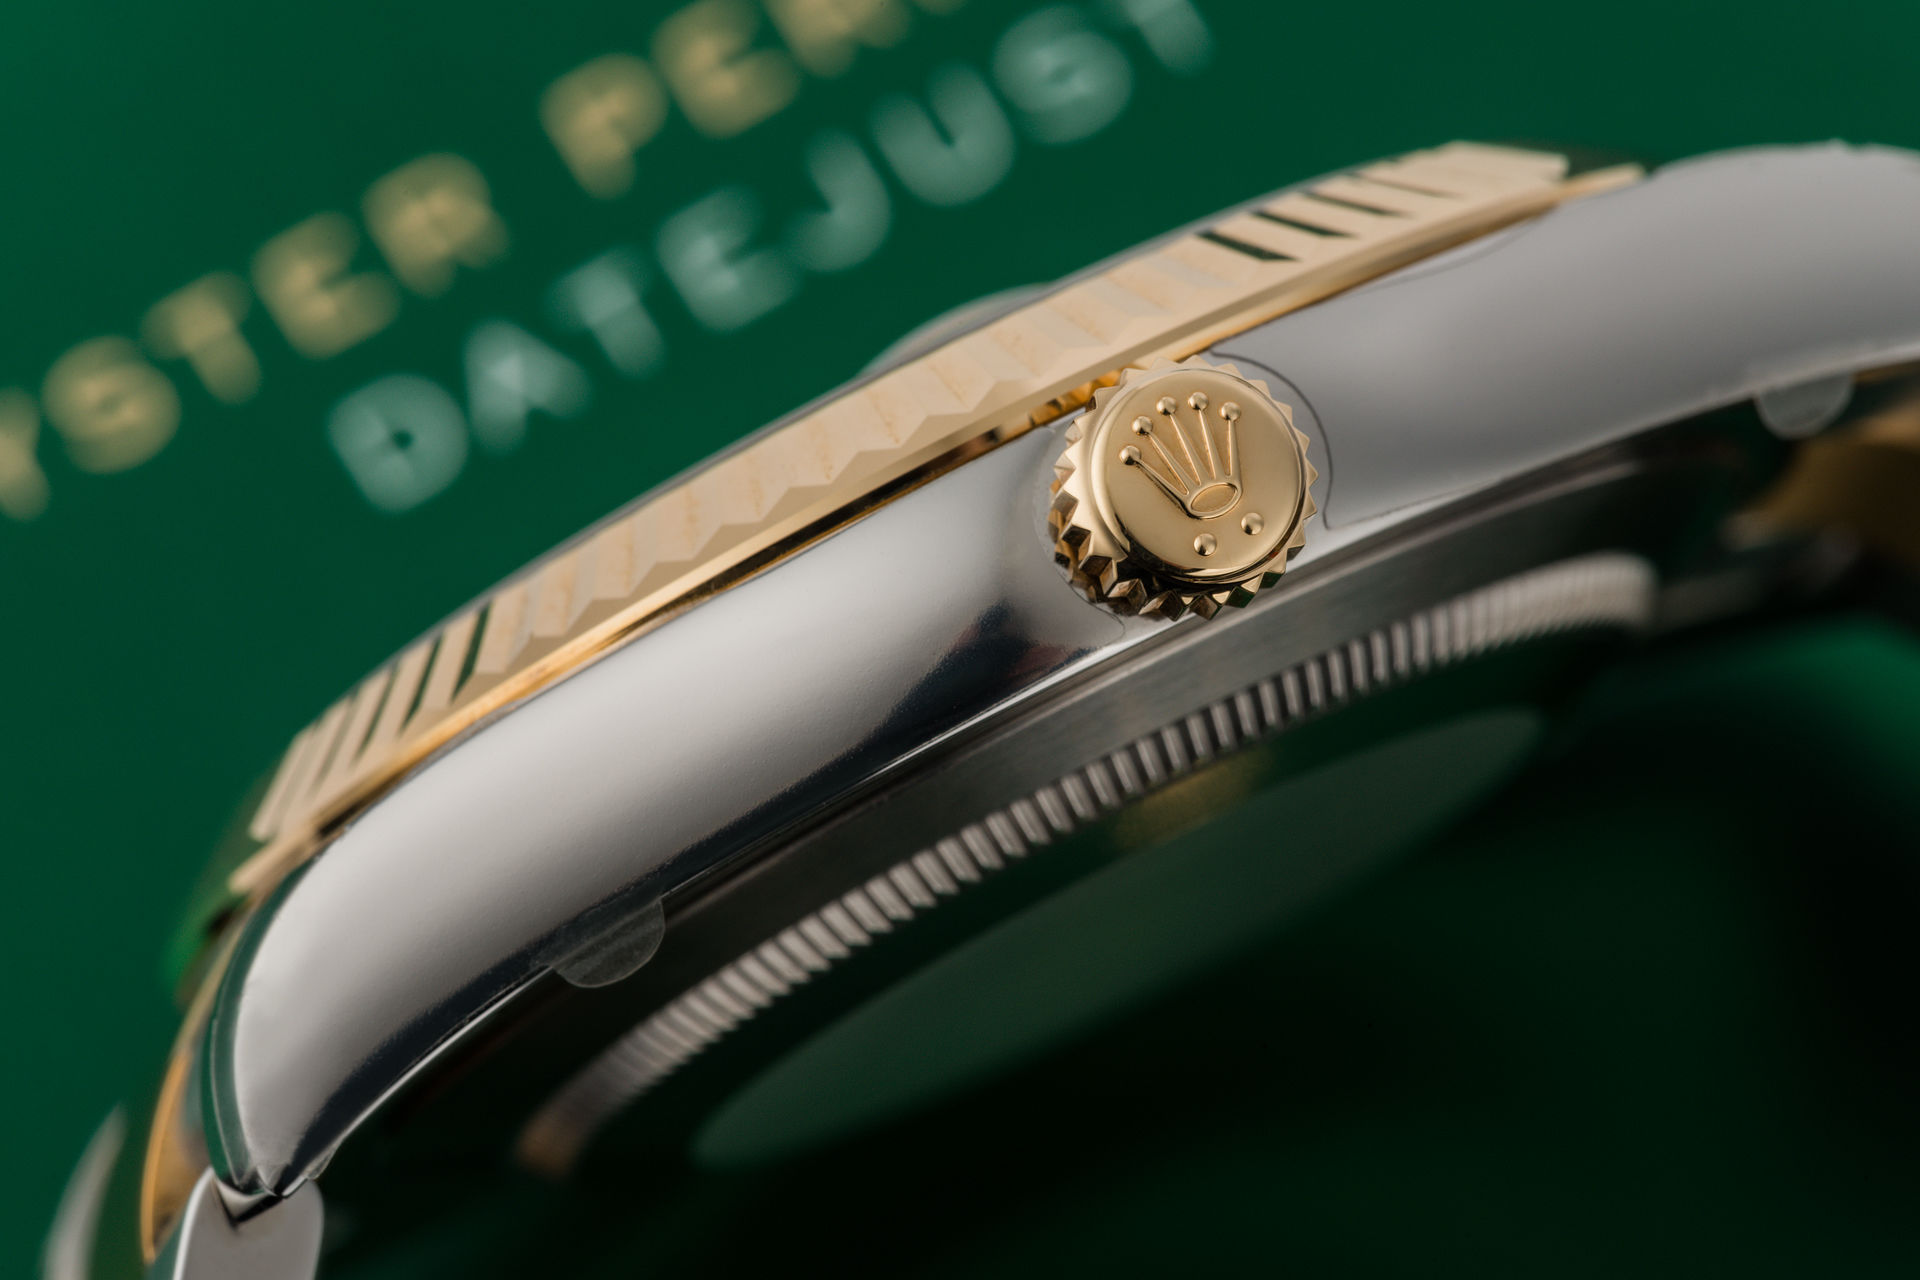 ref 116333 | Brand New 'Gold & Steel' | Rolex Datejust II